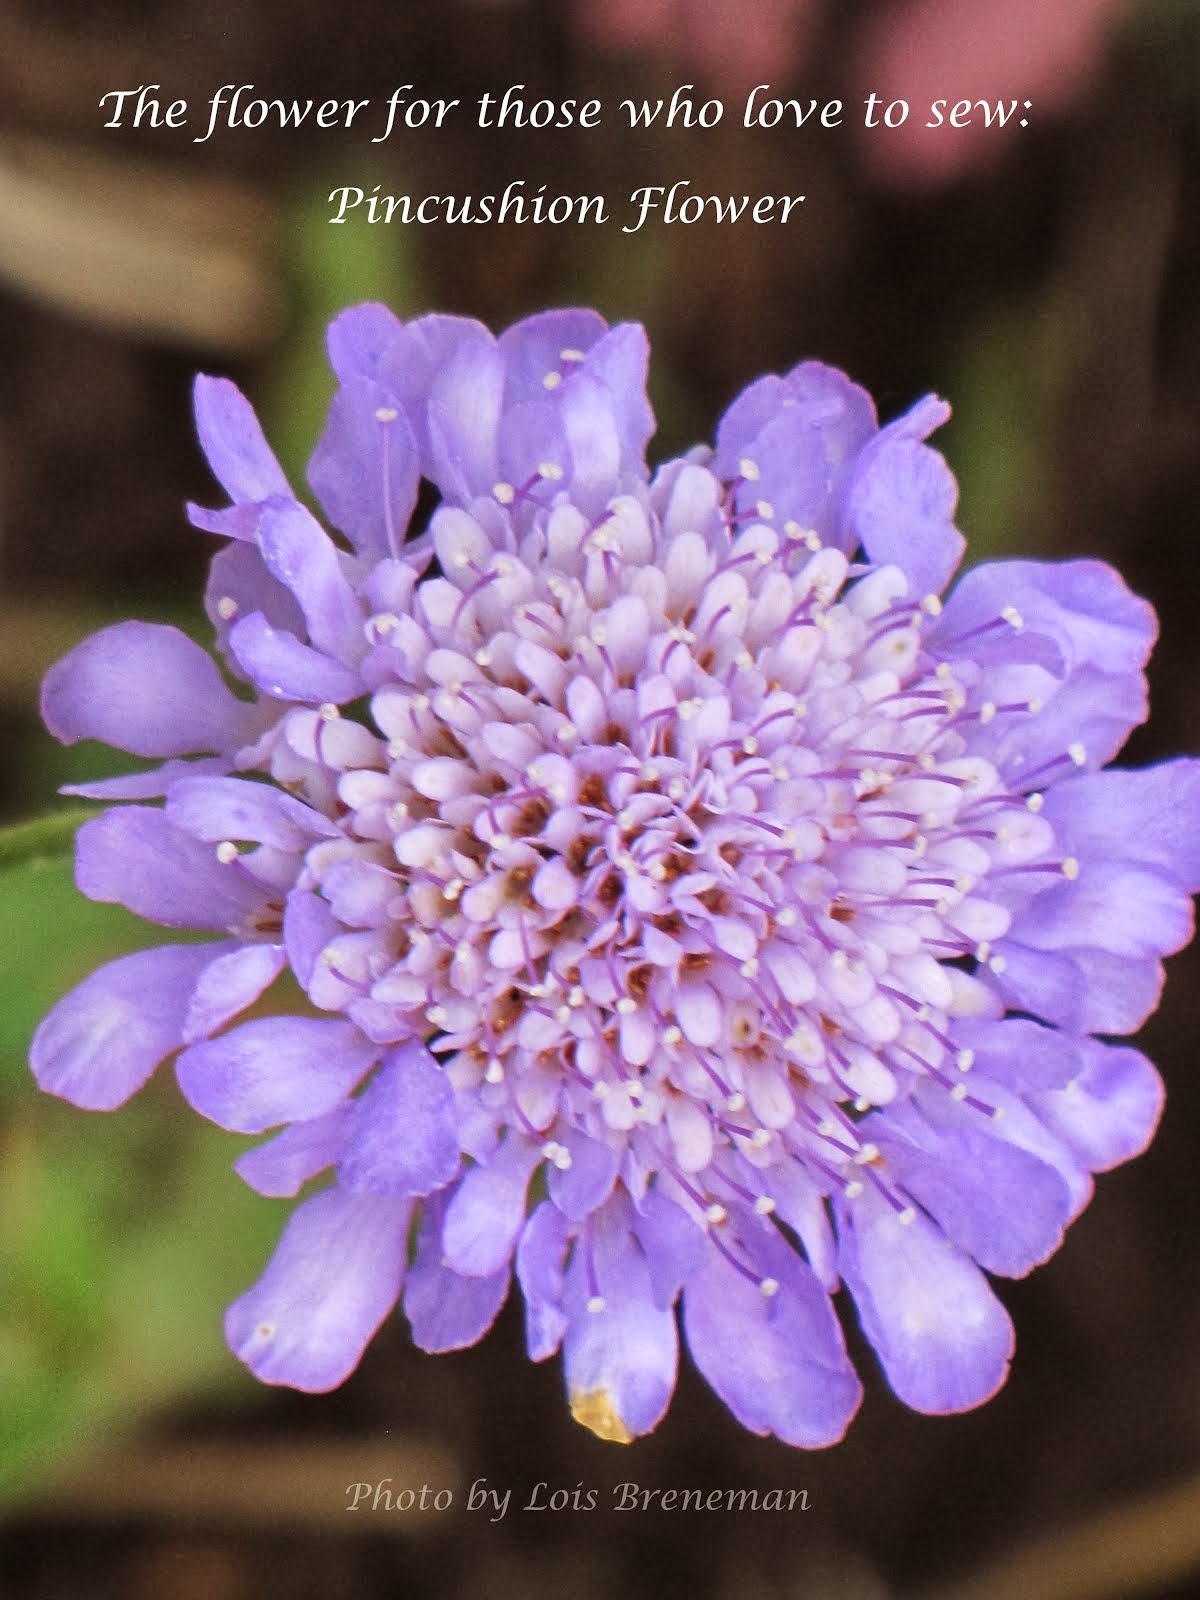 Pincushiopn Flower